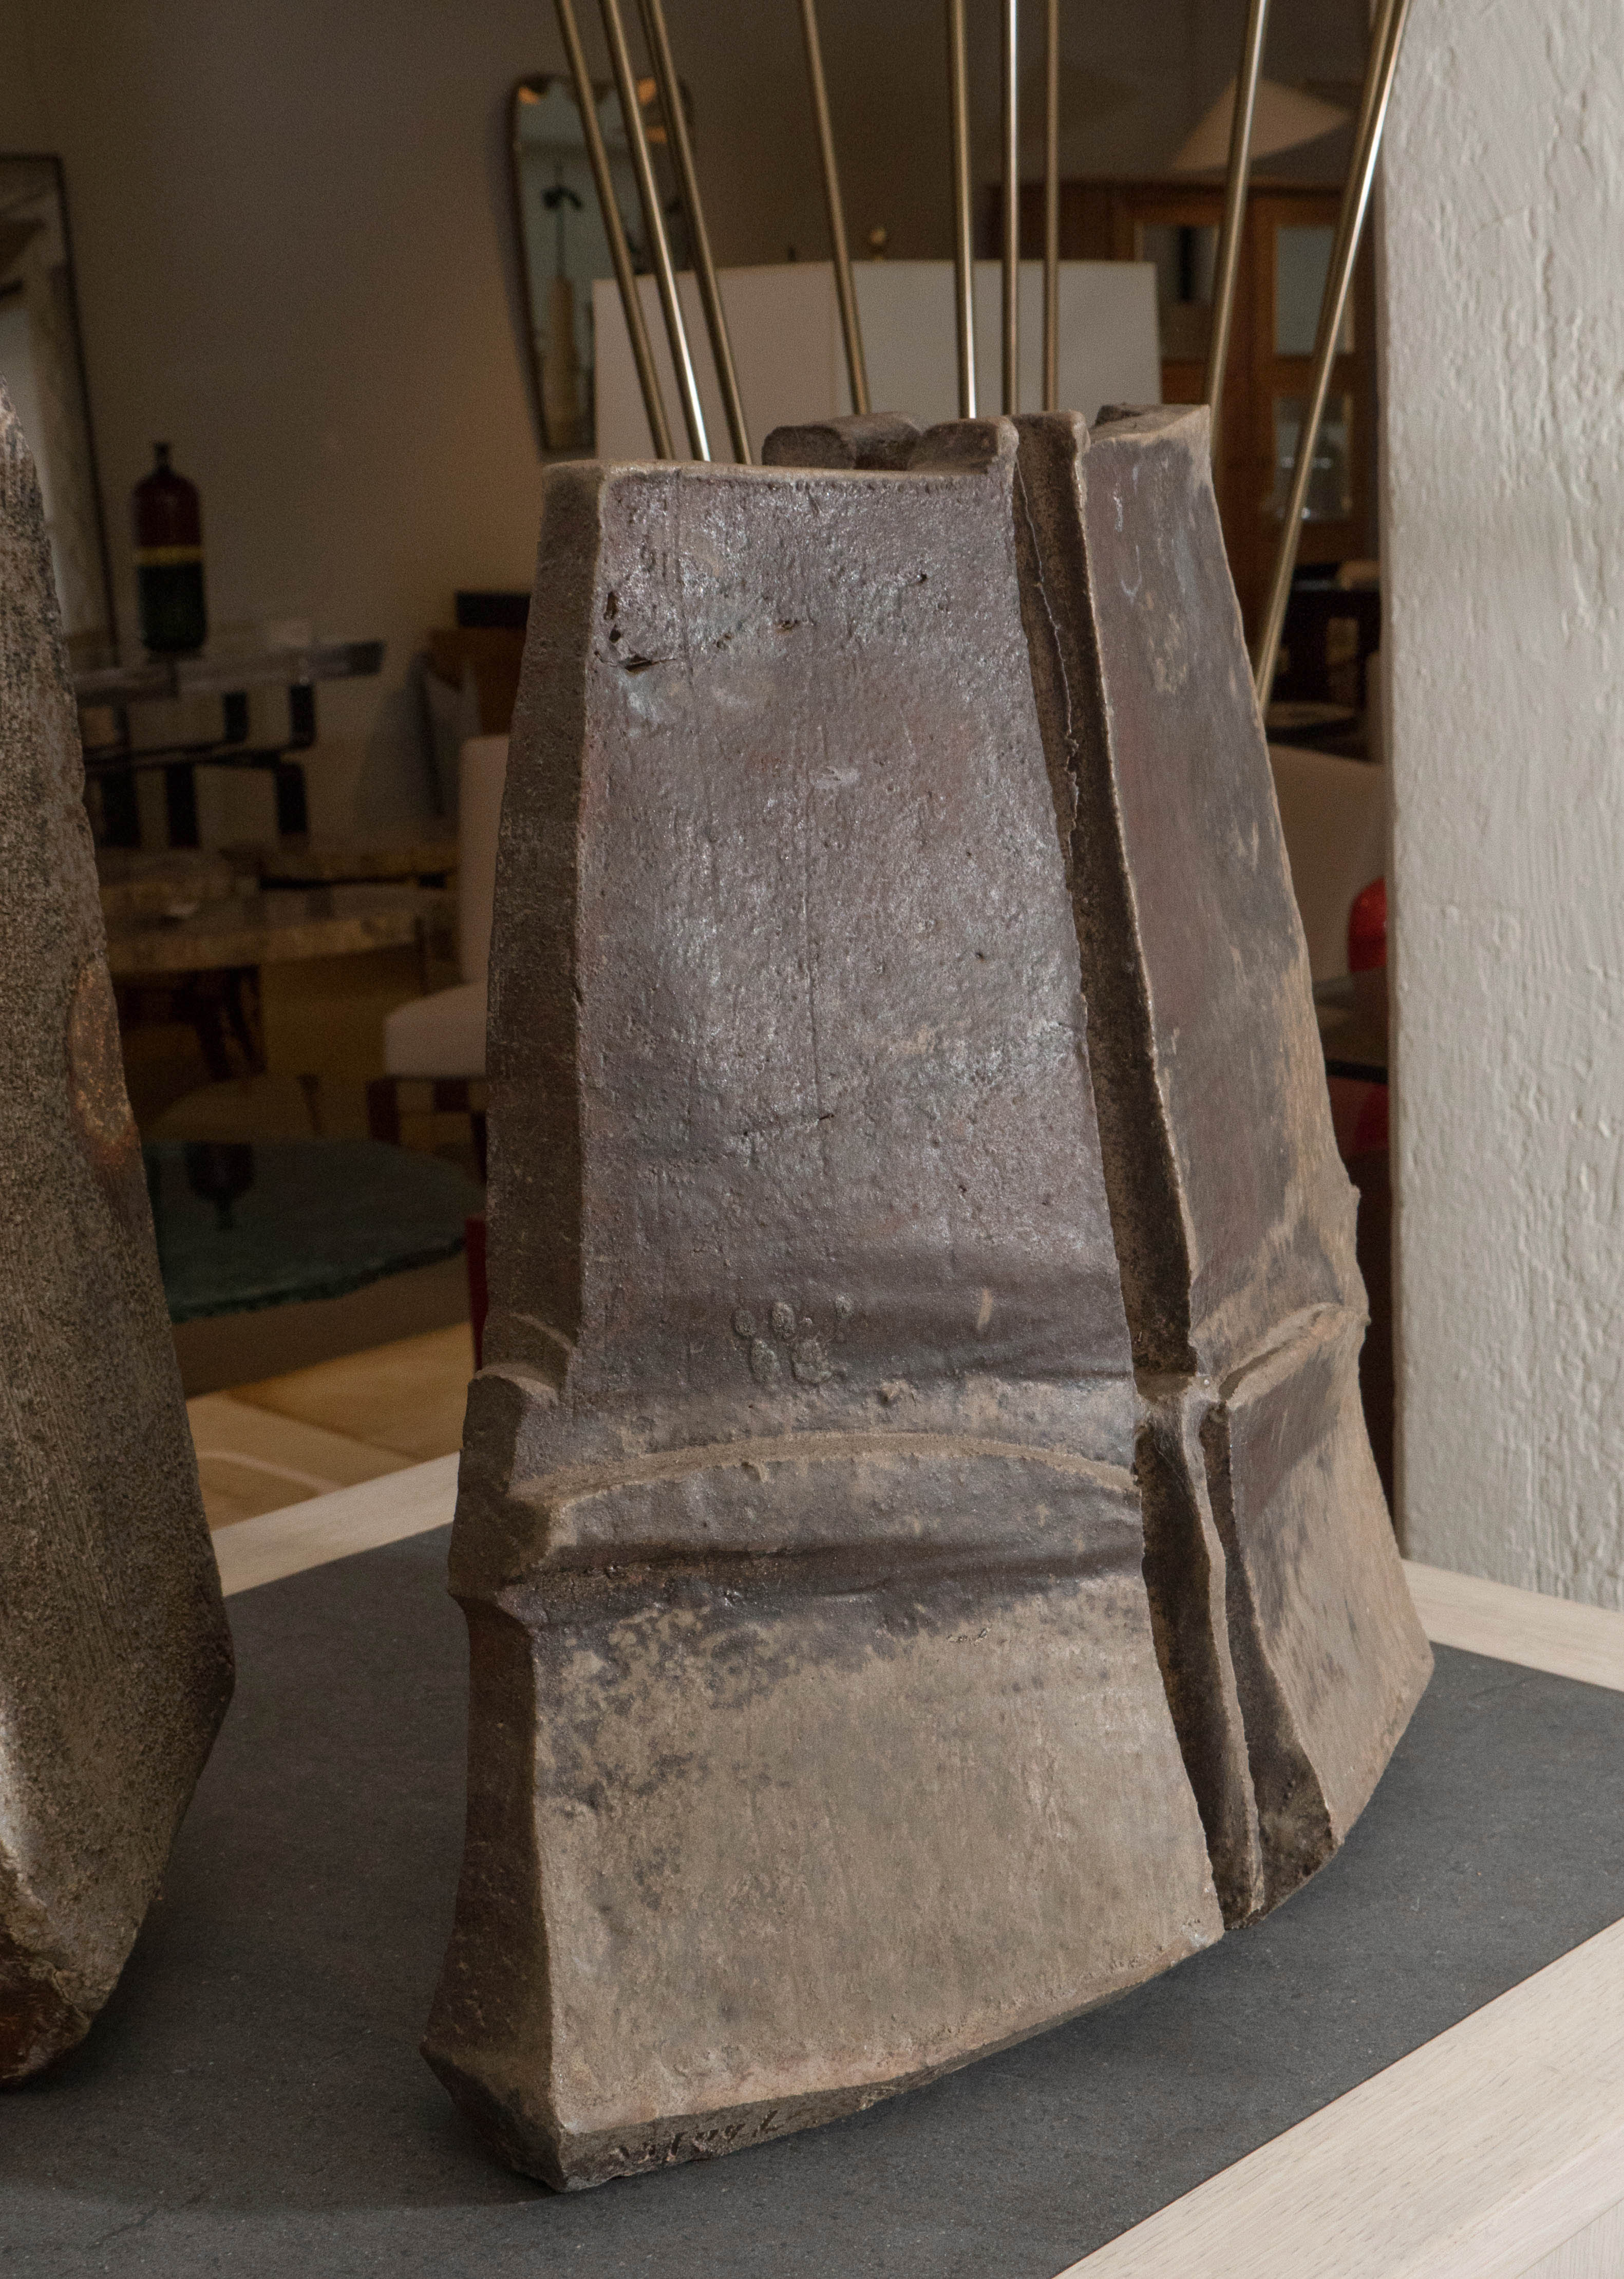 Eric Astoul Large Brown Ceramic Sculptural Object or Vase, Untitled 2014 1